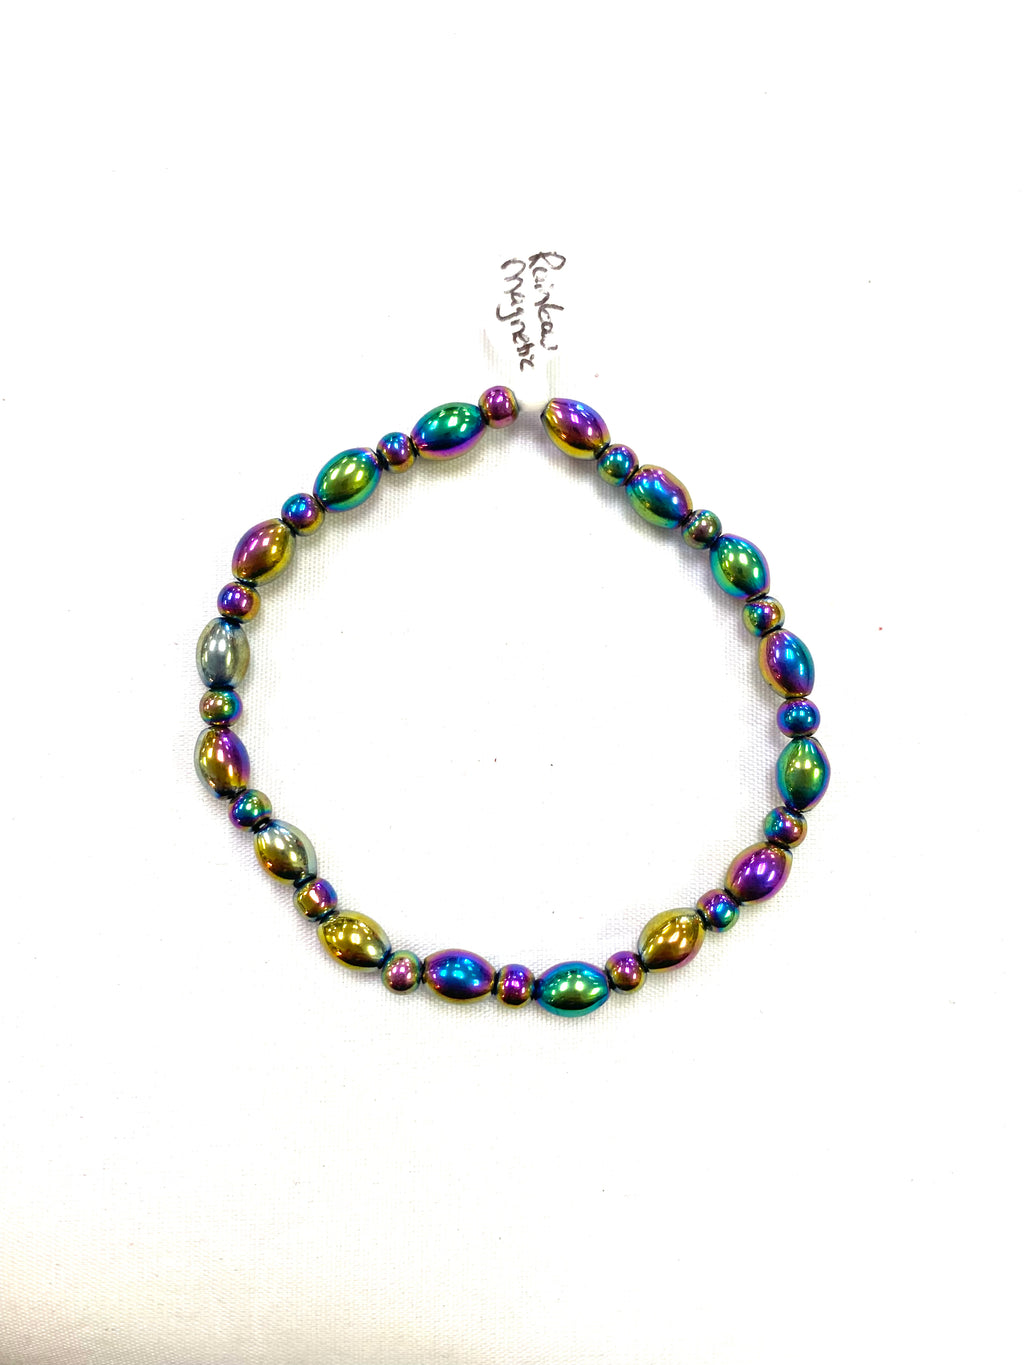 Rainbow Magnetic Bracelet - Lighten Up Shop